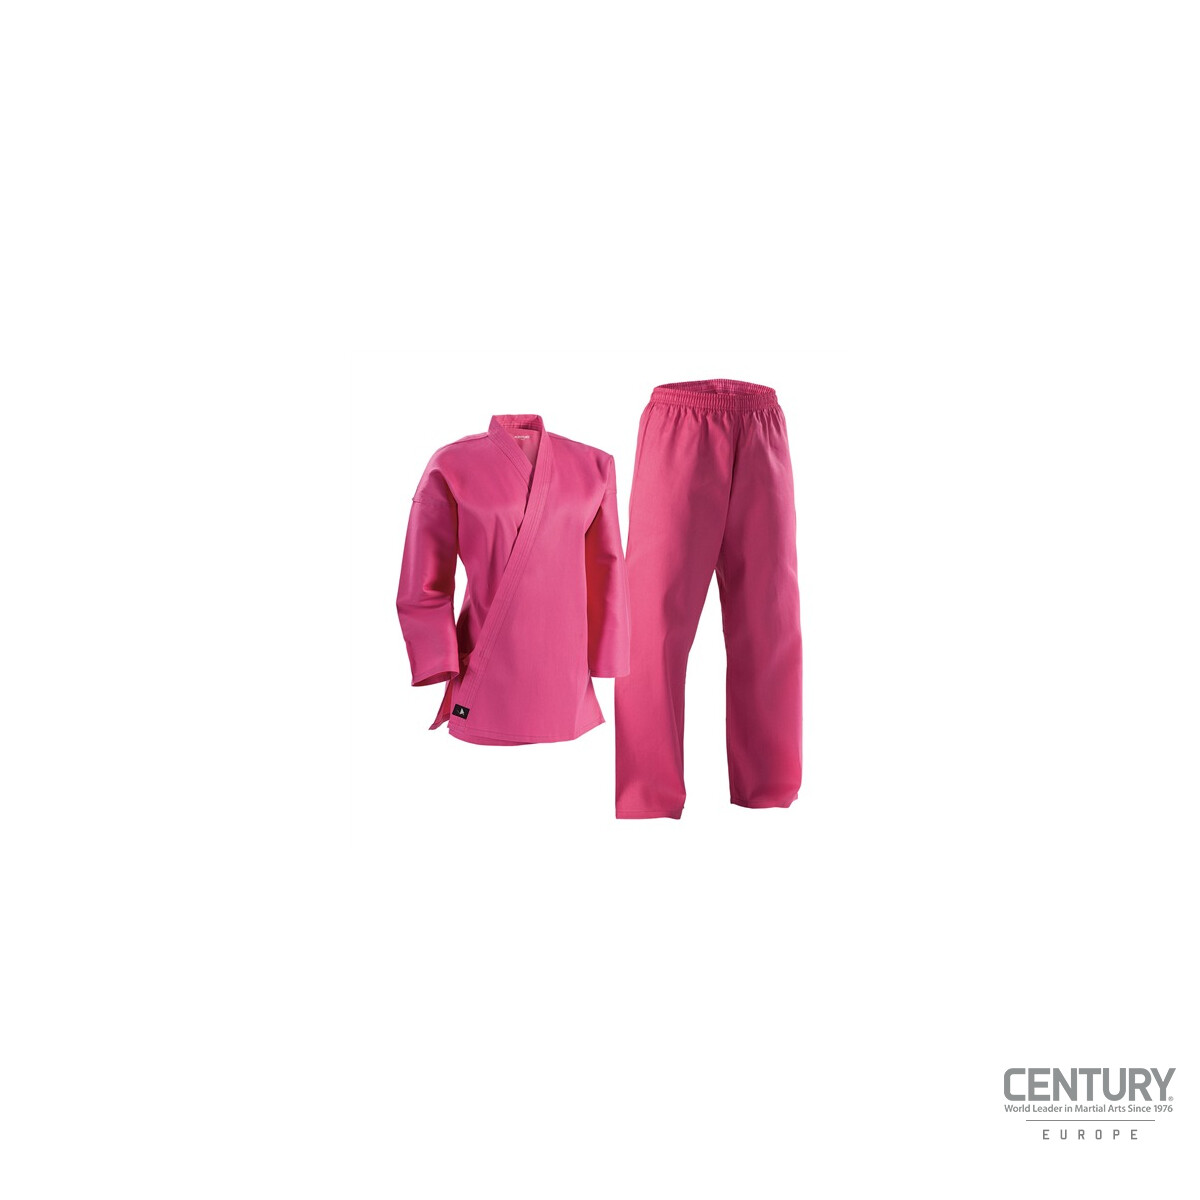 LW Student Uniform 6 oz Pink [6] 188 - 196 cm